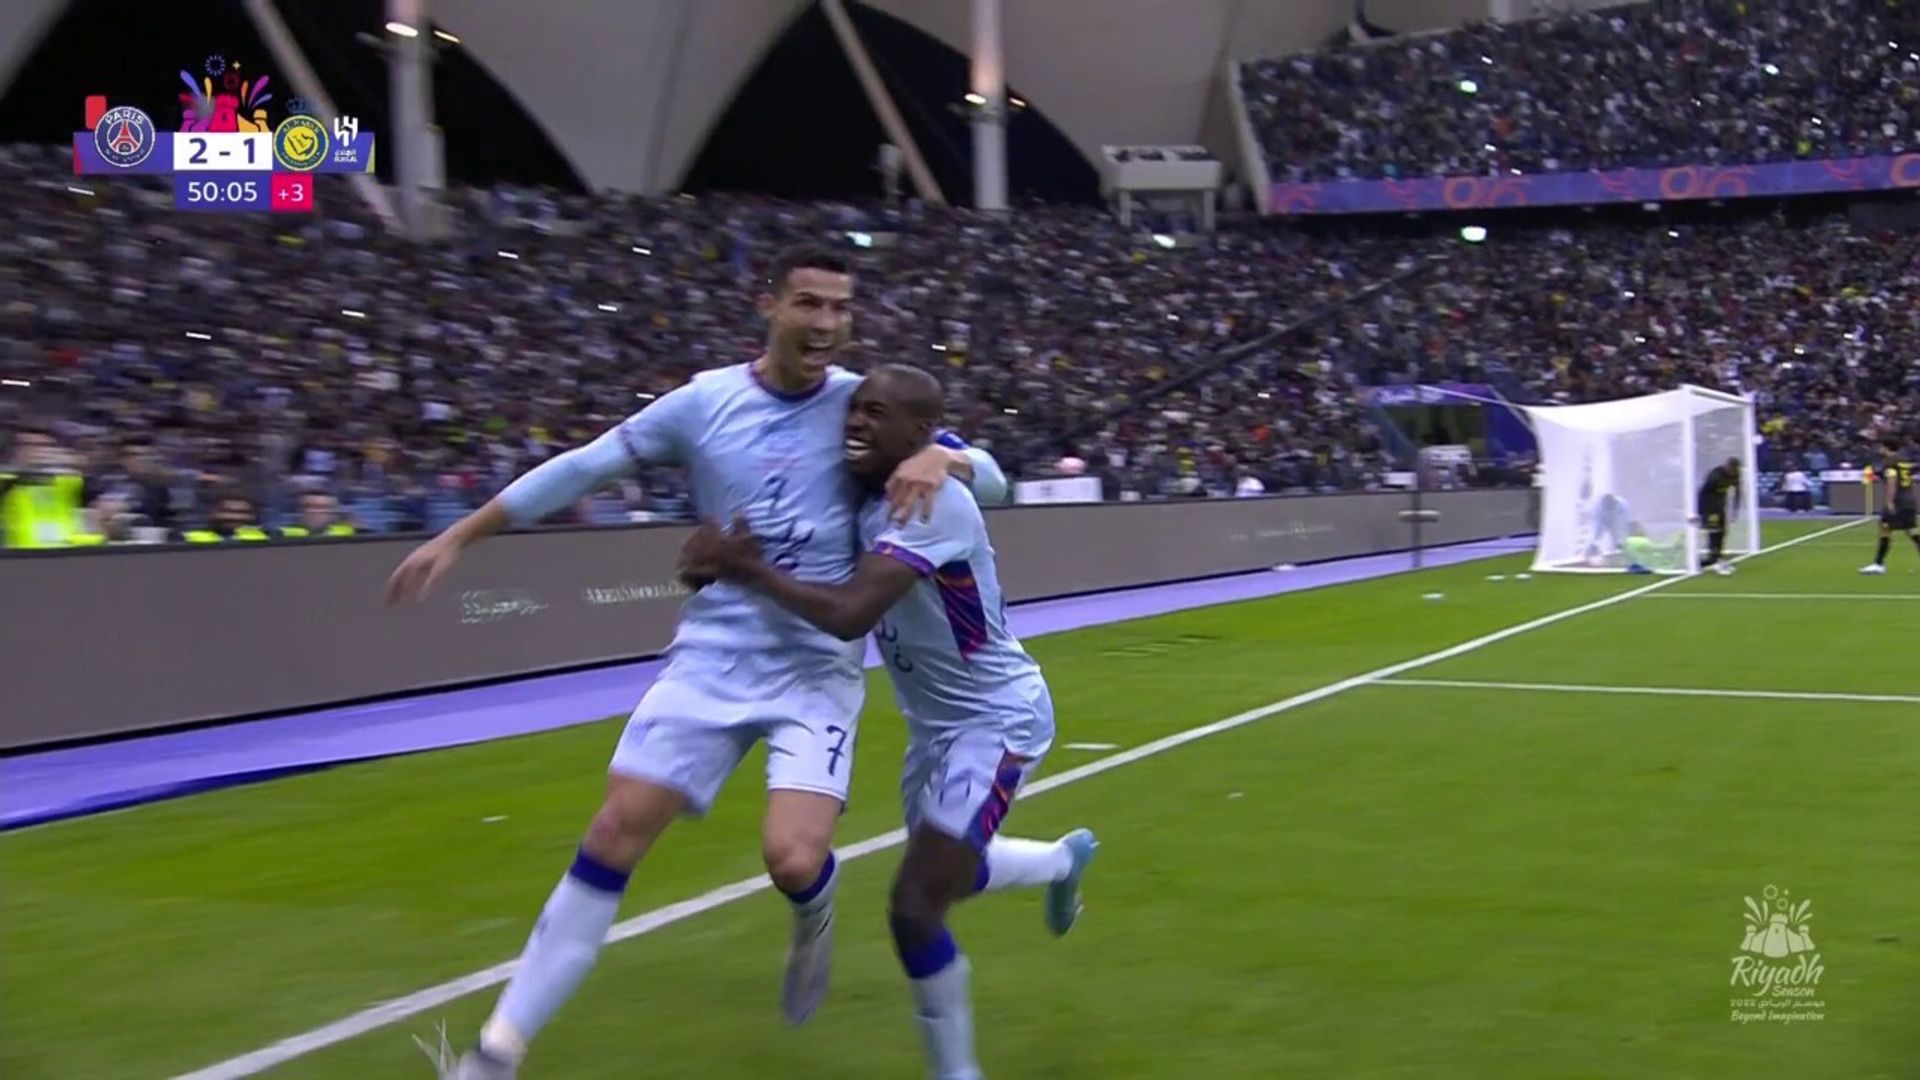 Ronaldo fires home his second goal against PSG!